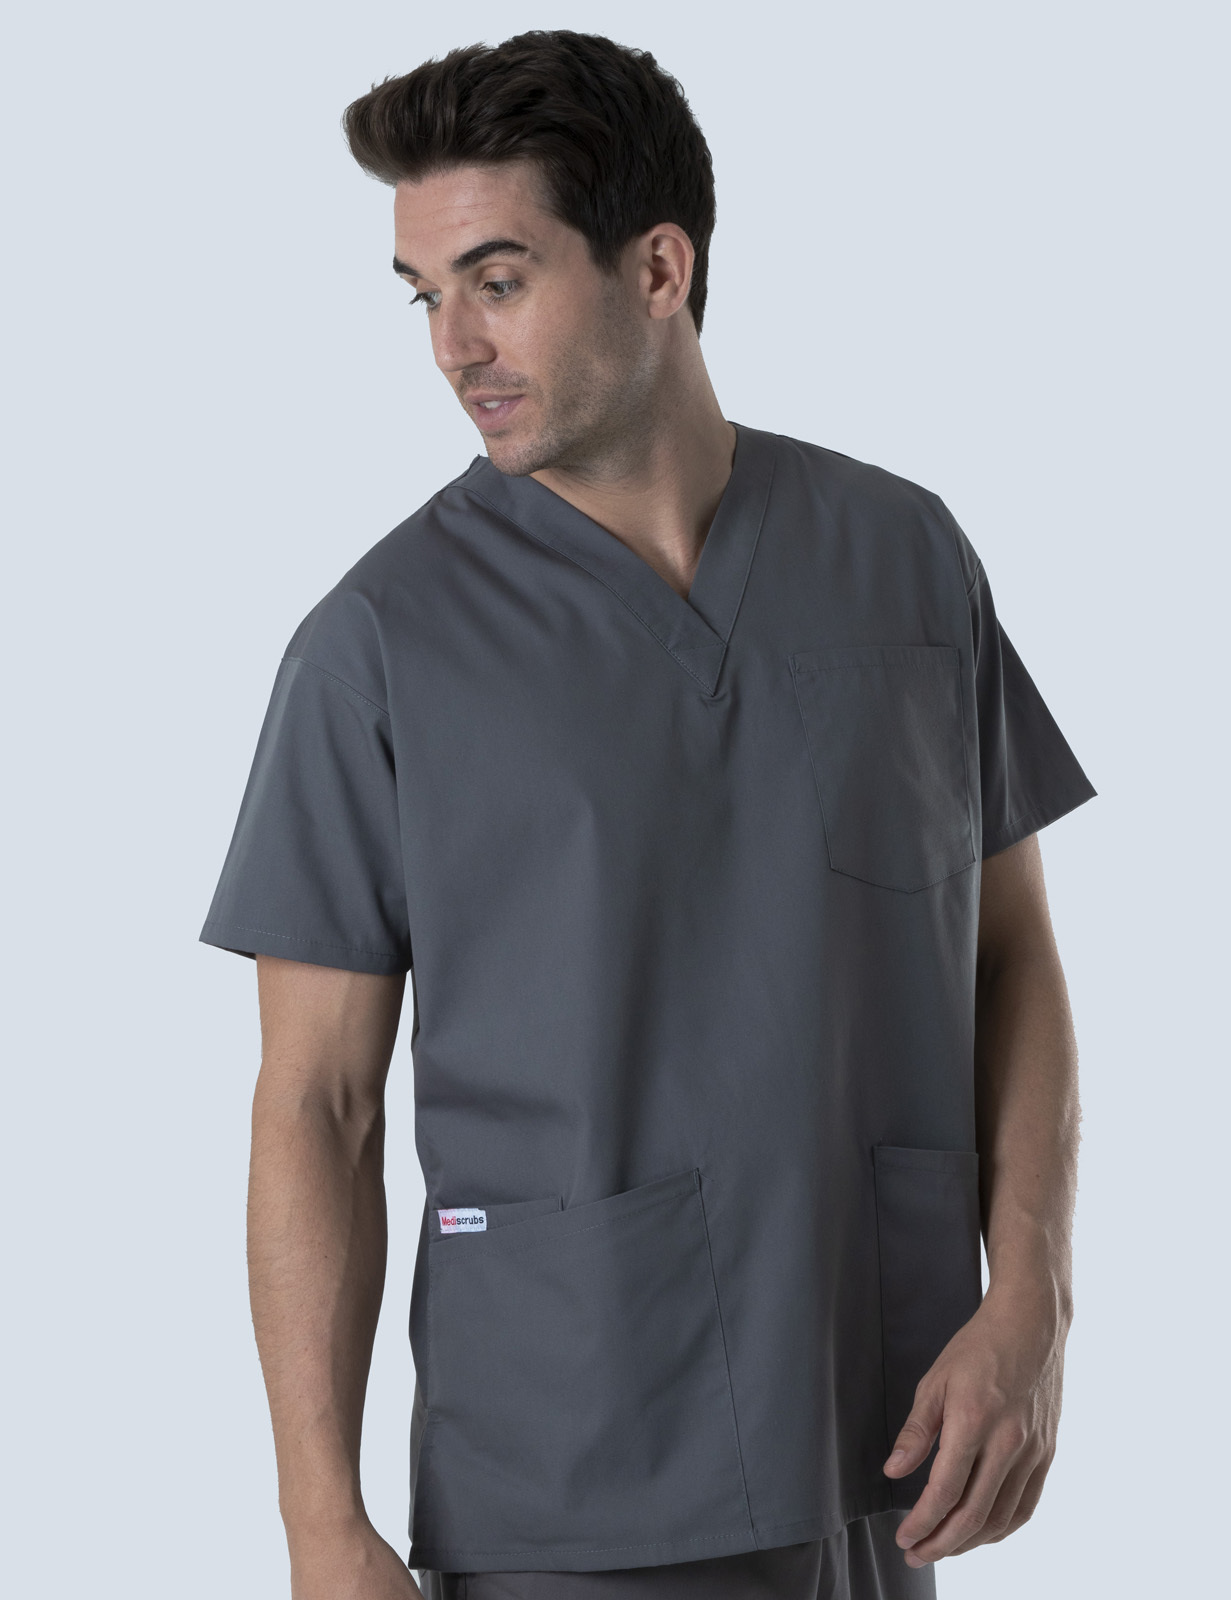 Vet24 - Veterinarian (4 Pocket Scrub Top and Regular Pants in Steel Grey incl Logos)